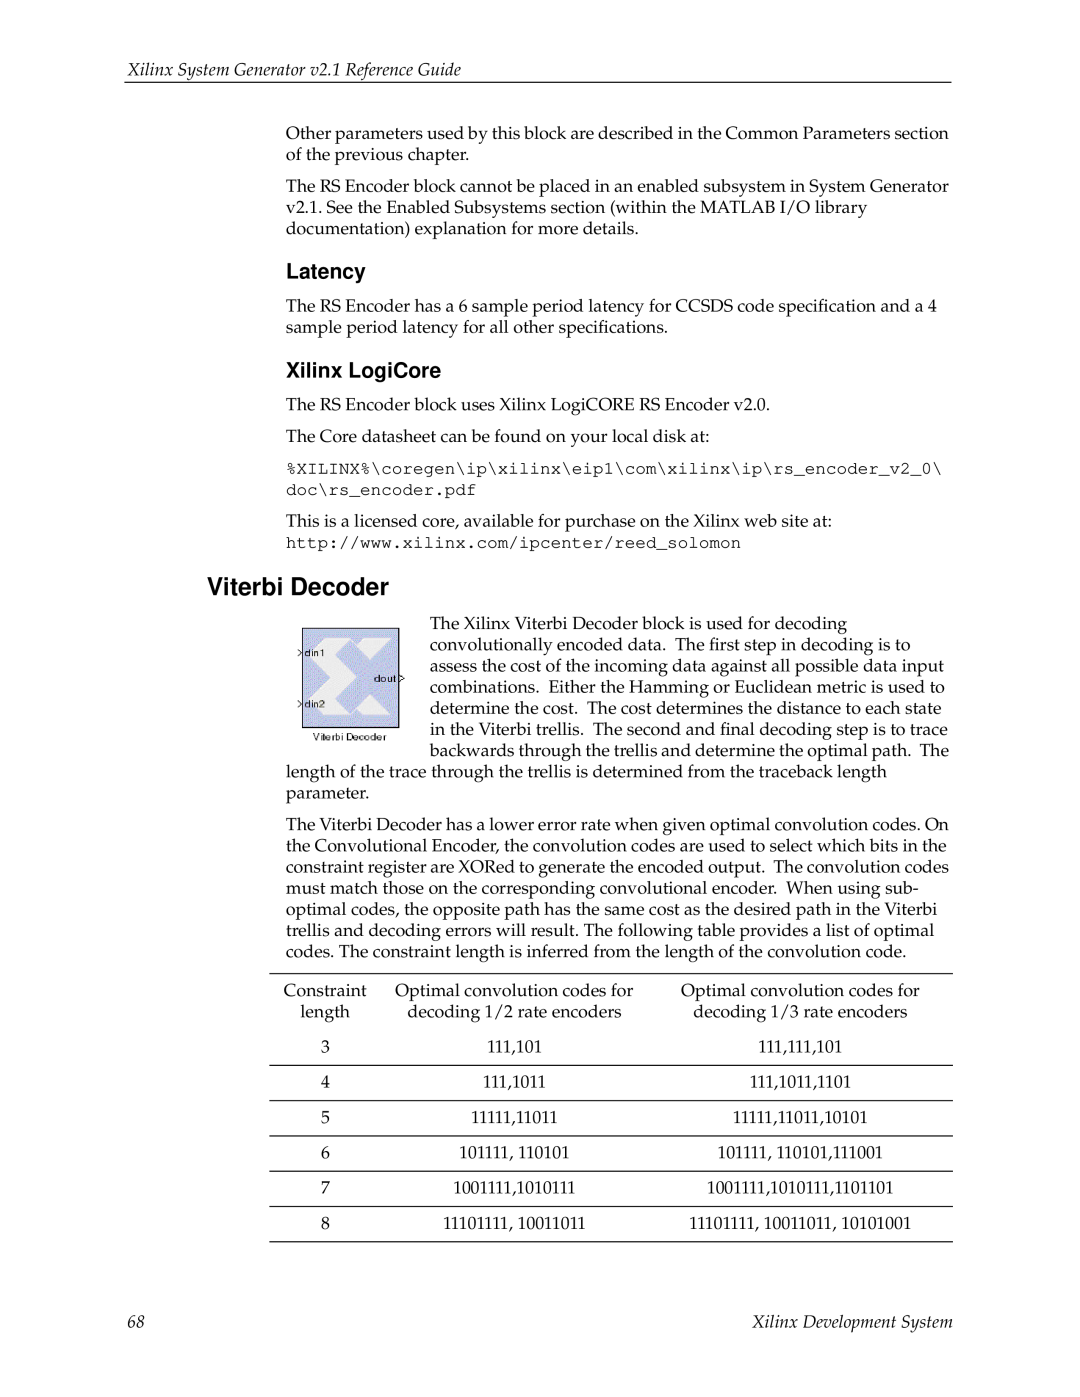 Xilinx V2.1 manual Viterbi Decoder, Latency, Xilinx LogiCore, Xilinx System Generator v2.1 Reference Guide 